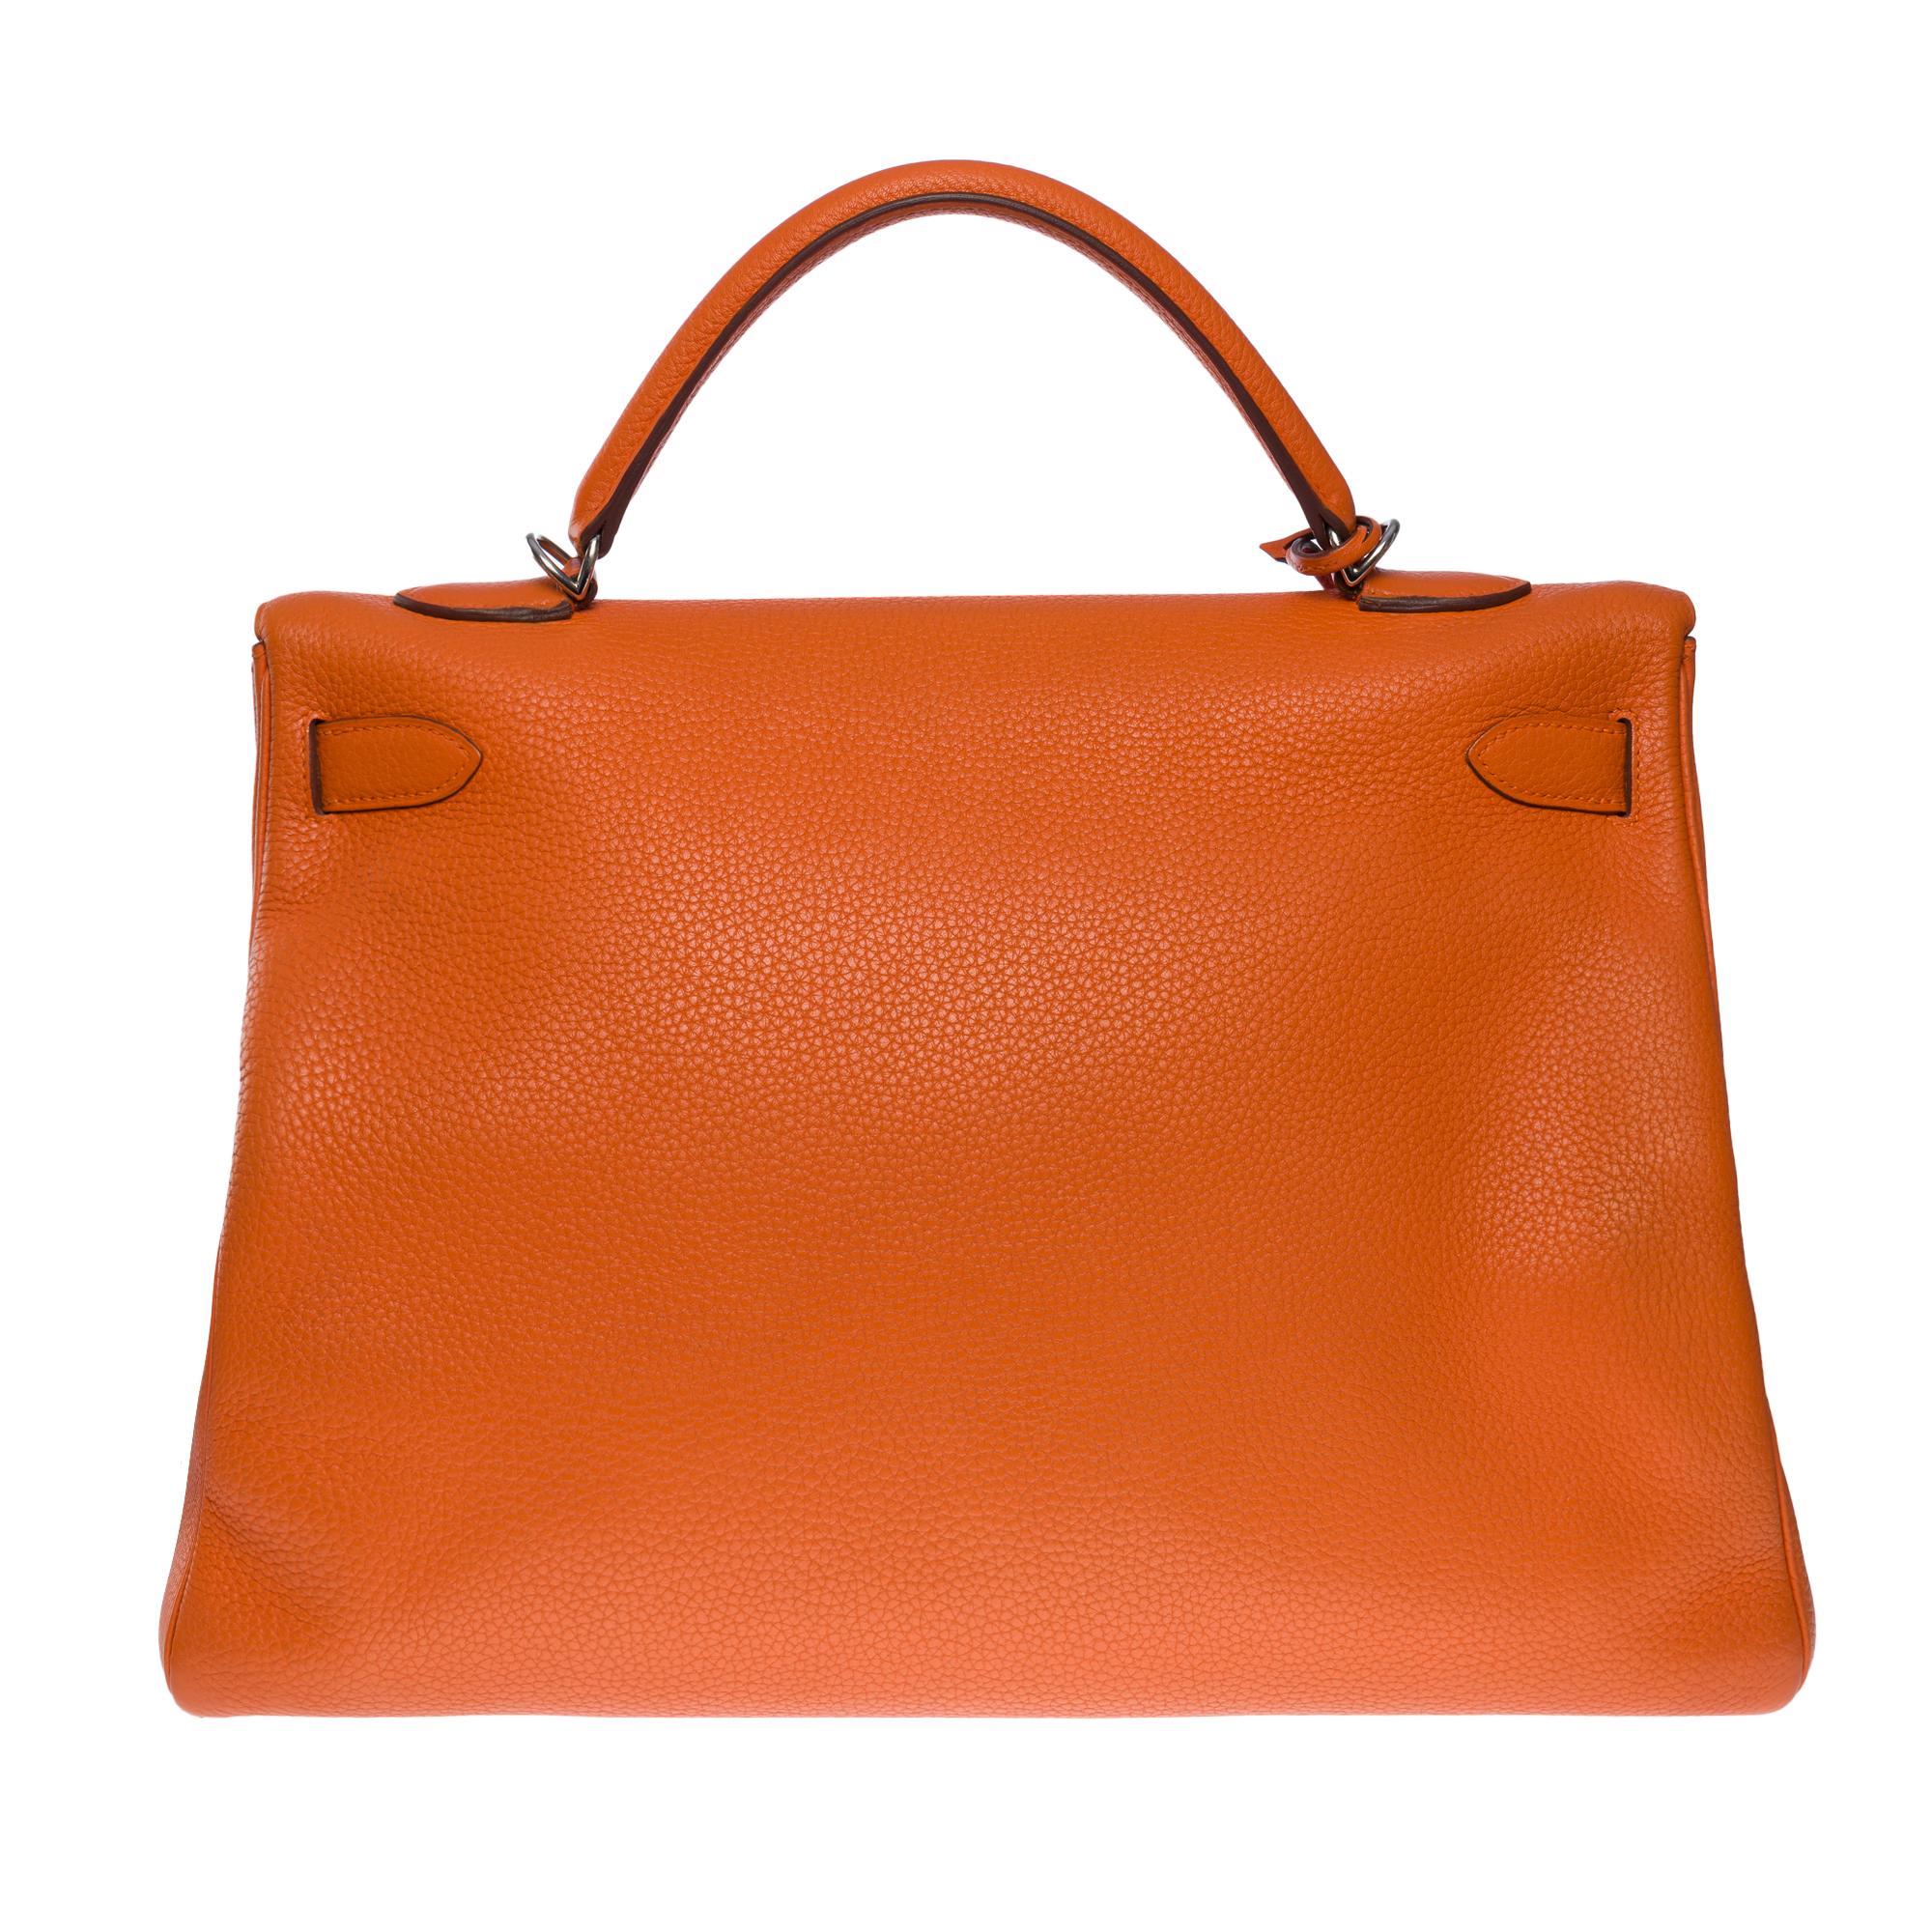 Women's Hermes Kelly 40 retourne handbag strap in Orange Togo leather, SHW